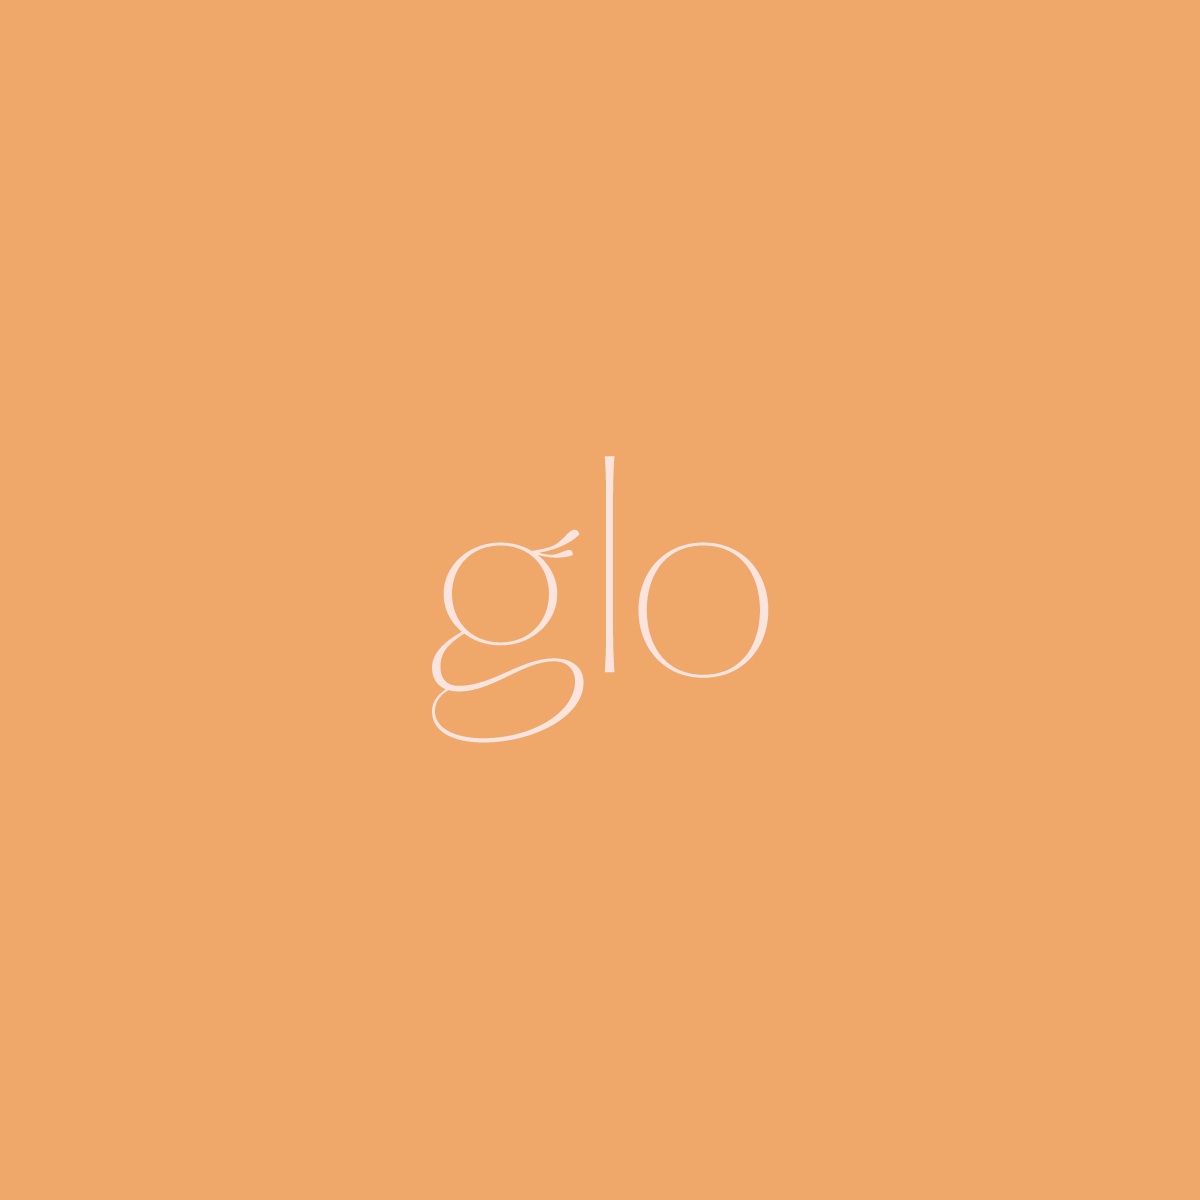 Glo-Logo-2